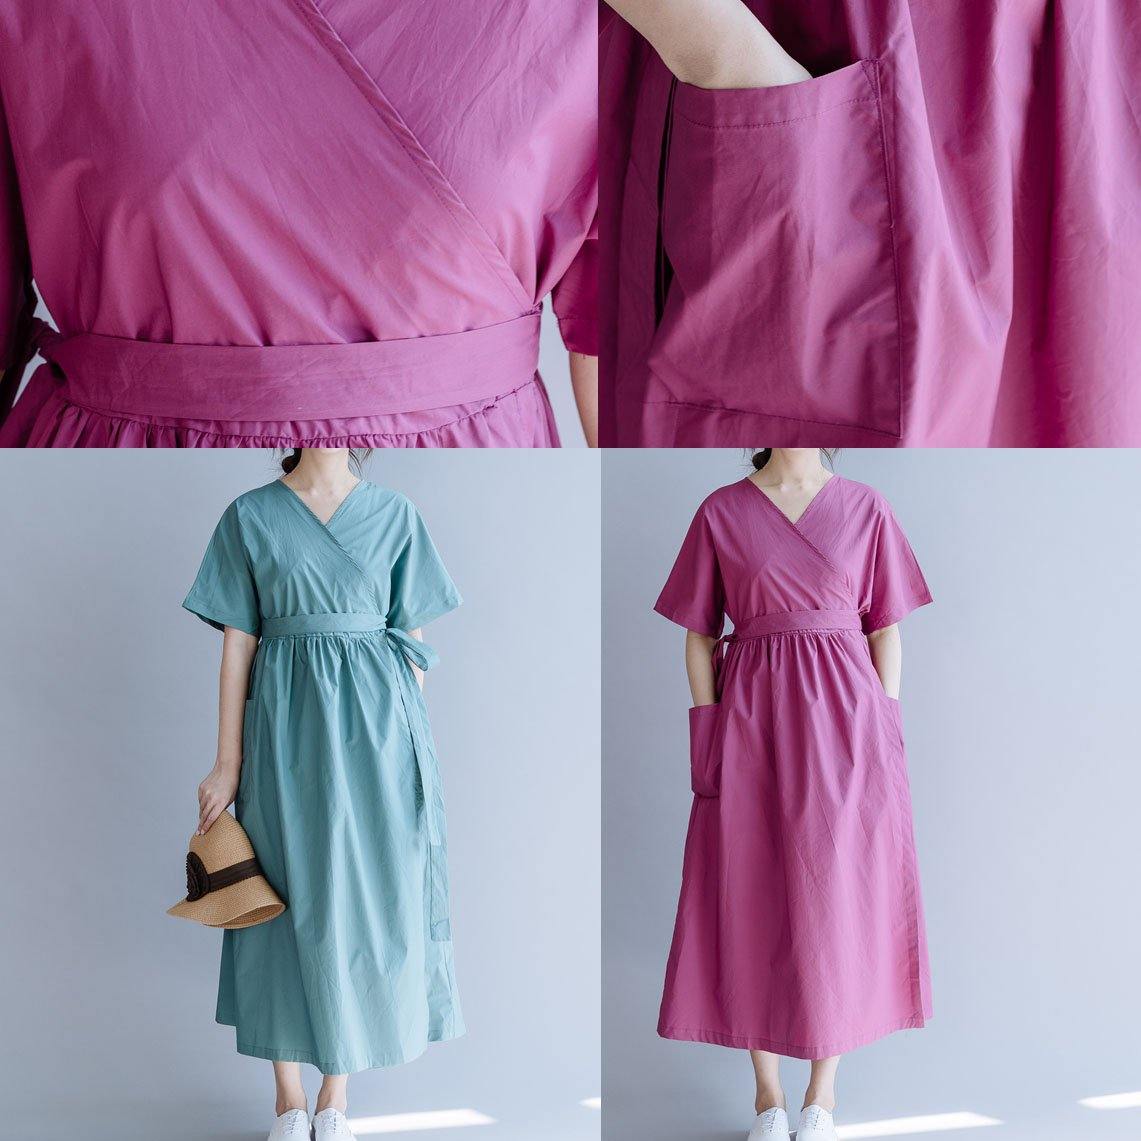 100% v neck tie waist cotton dresses Neckline pink A Line Dress summer - Omychic